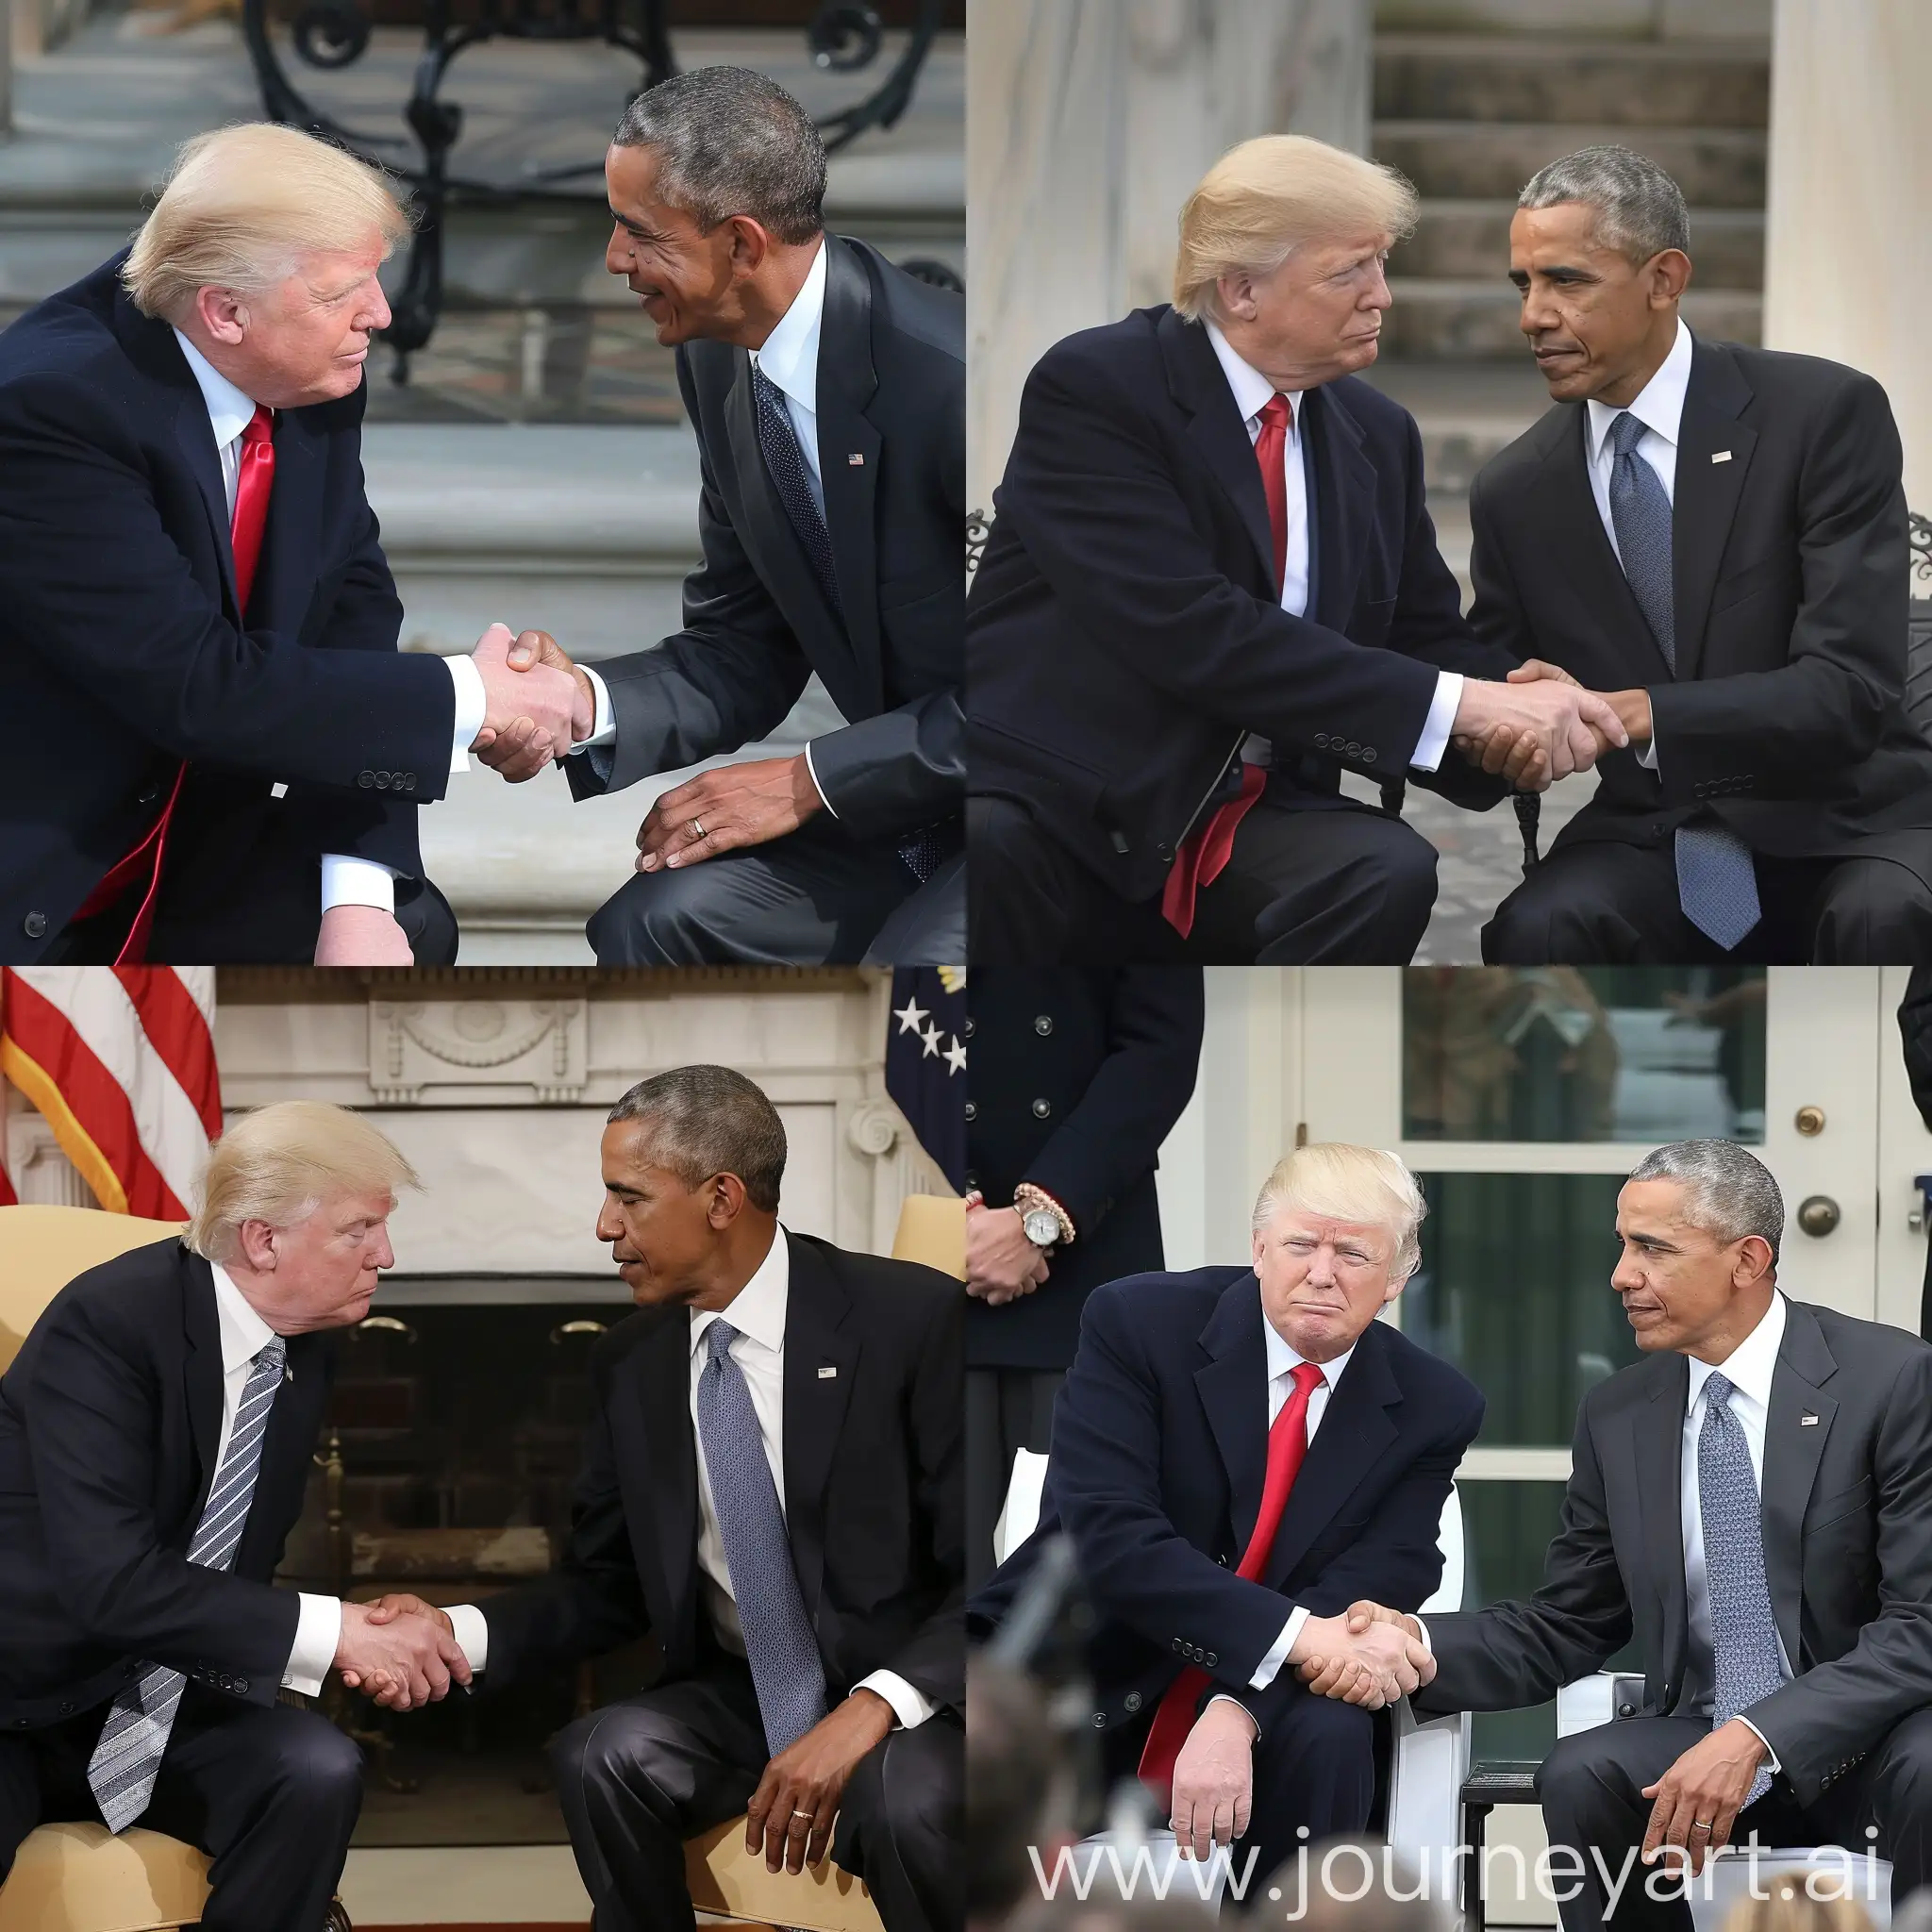 Trump-and-Obama-Handshake-Encounter